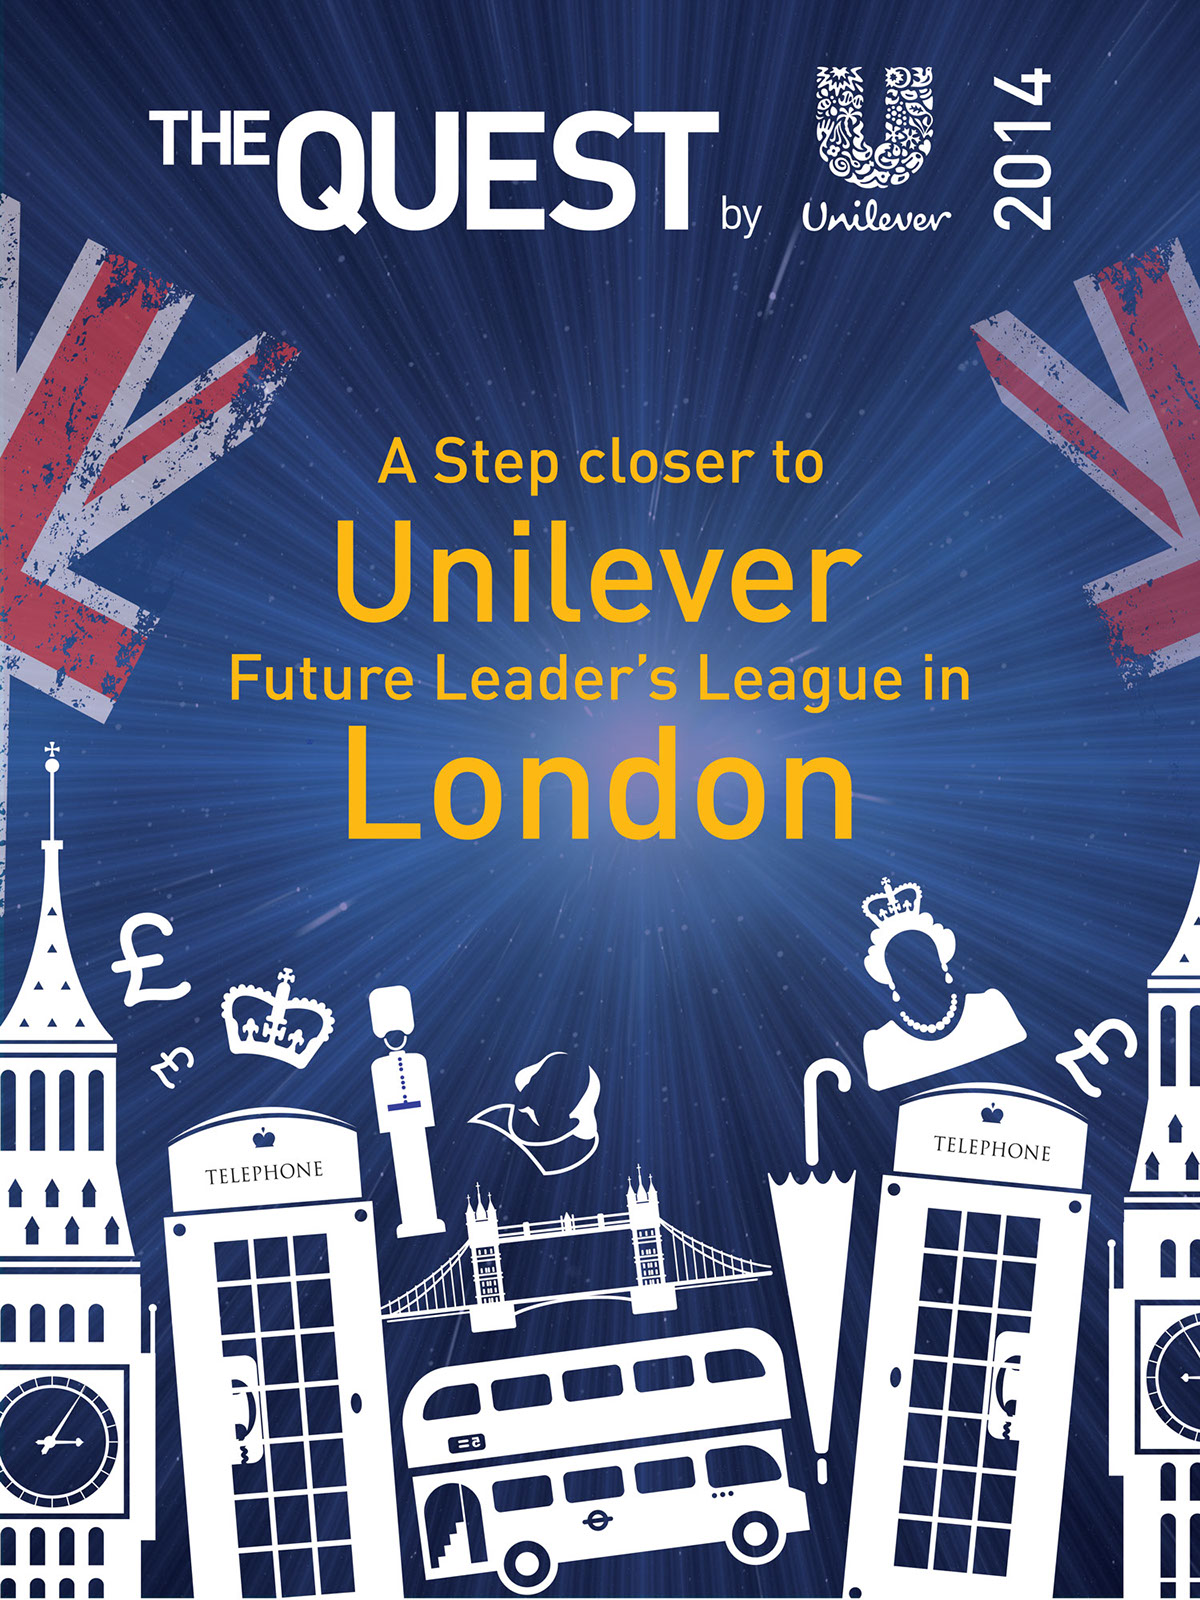 Unilever thequest London britain bigben